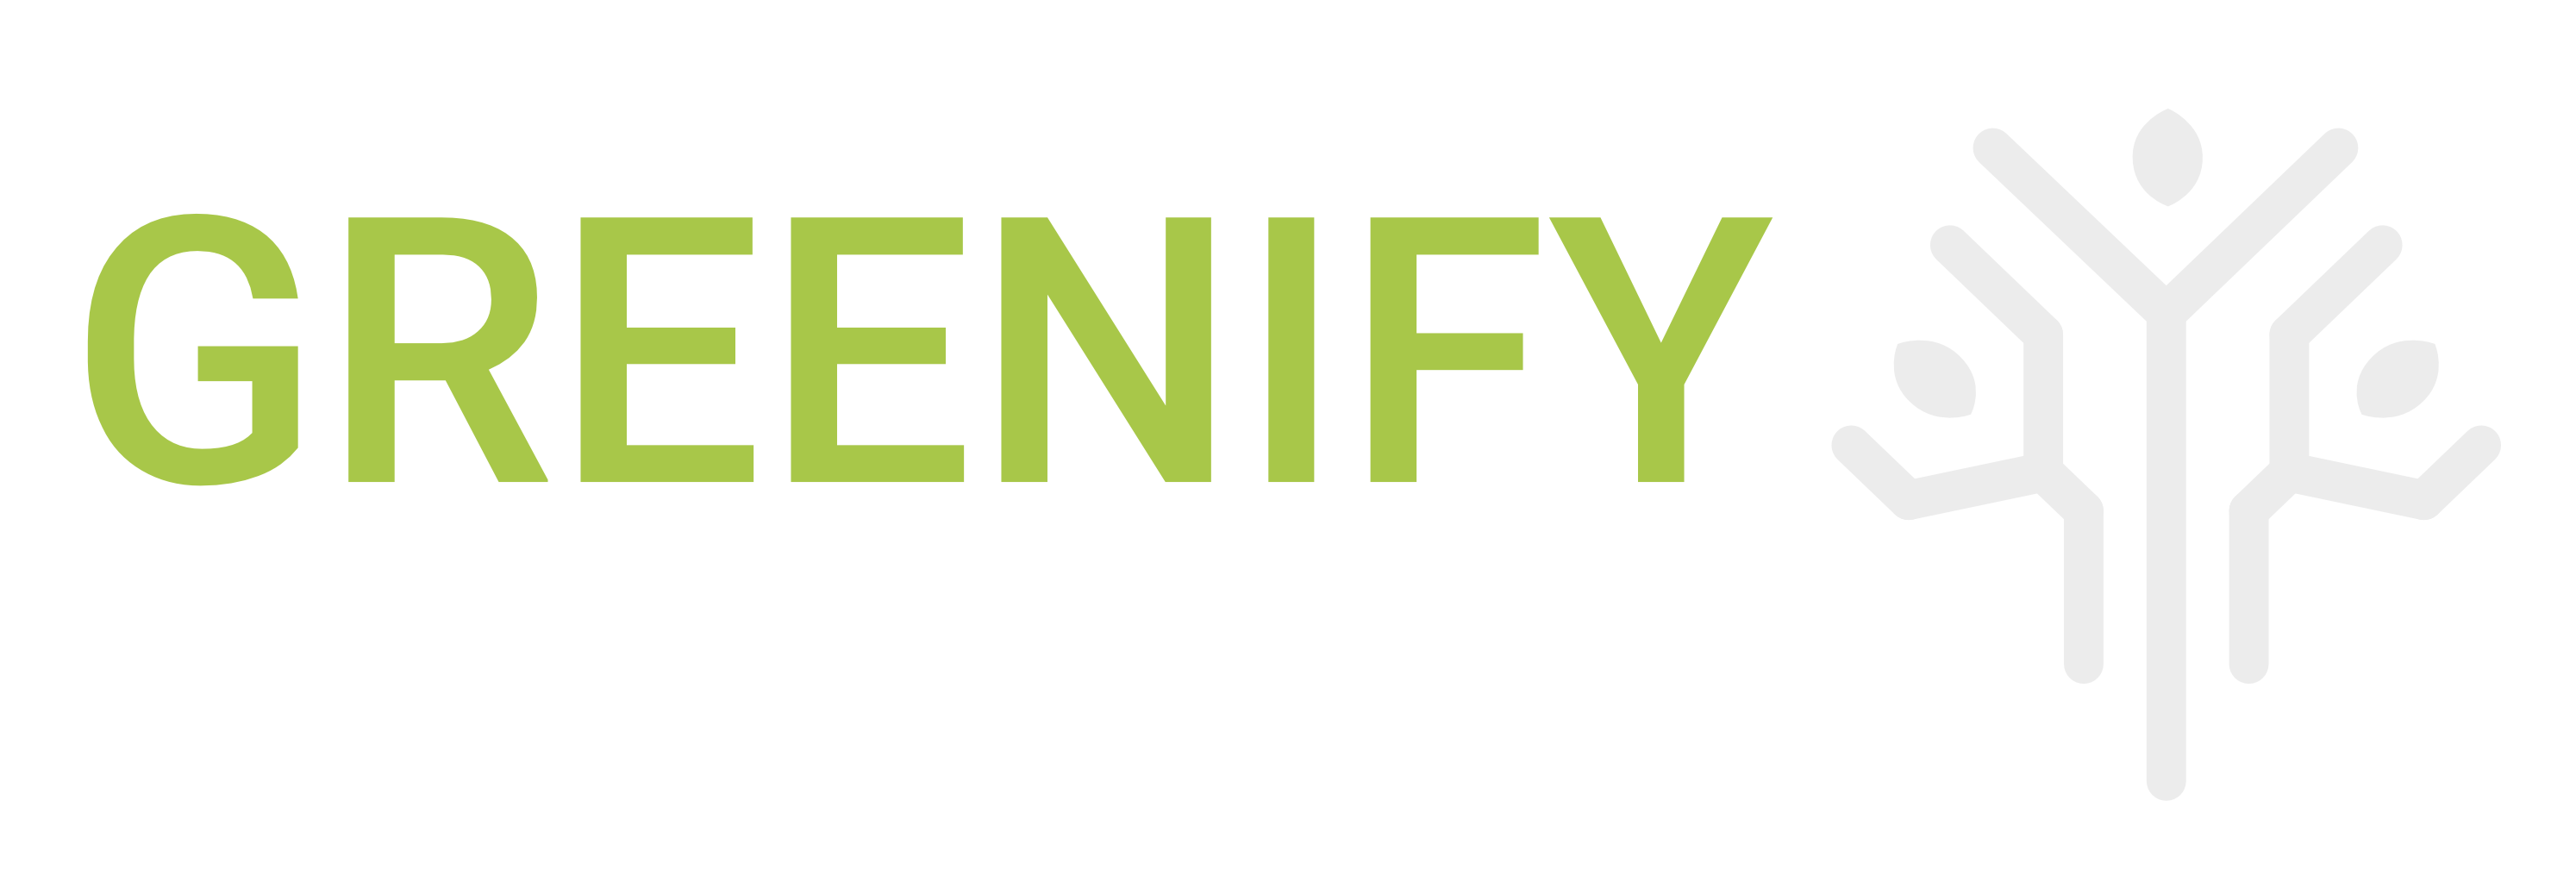 Greenify.work